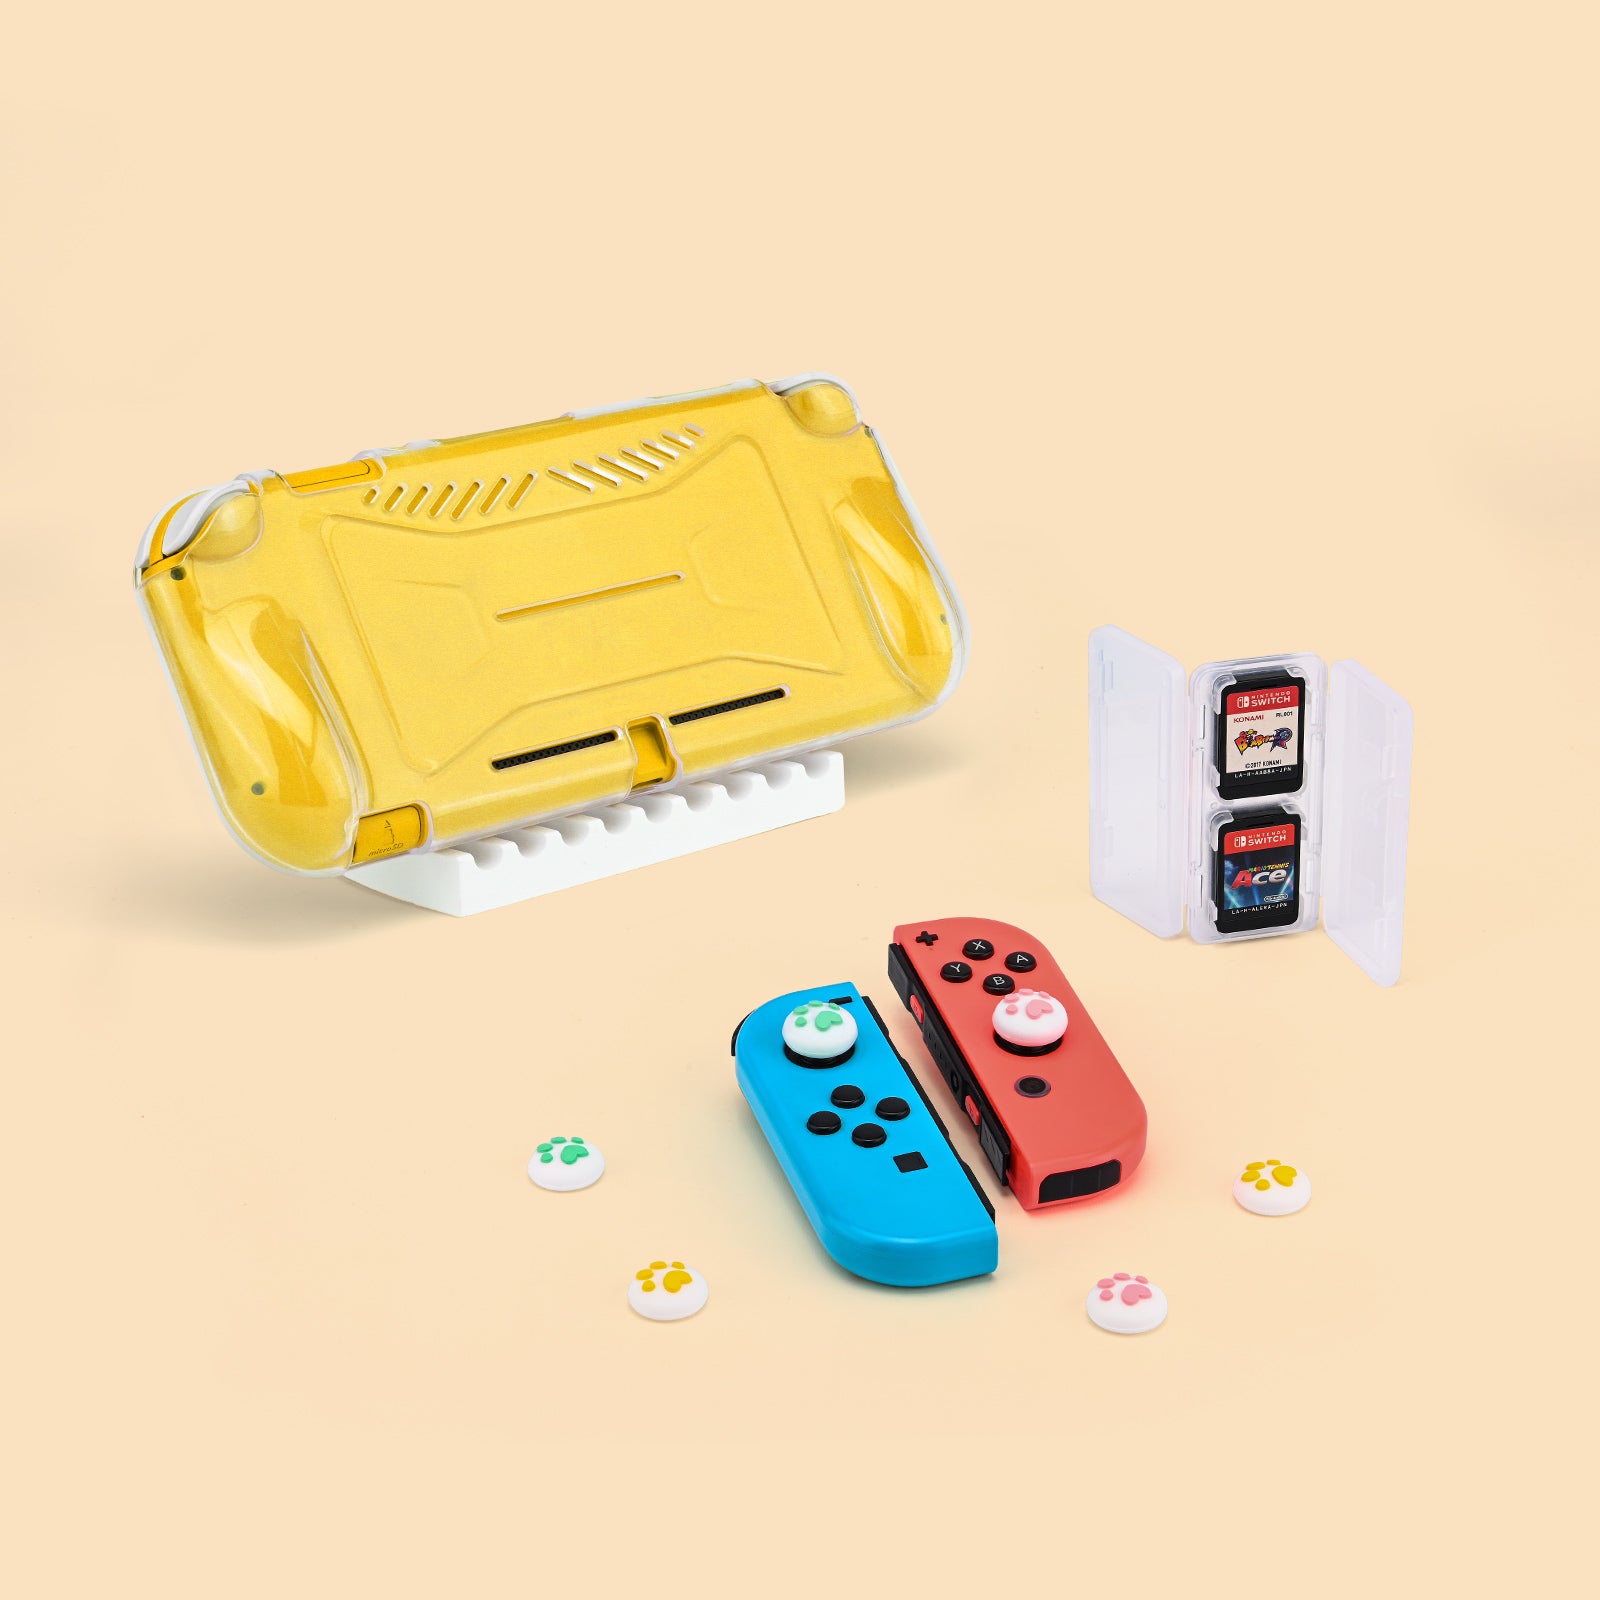 innoAura 17 Accessories Nintendo Switch Lite Carrying Case Travel Lite Case